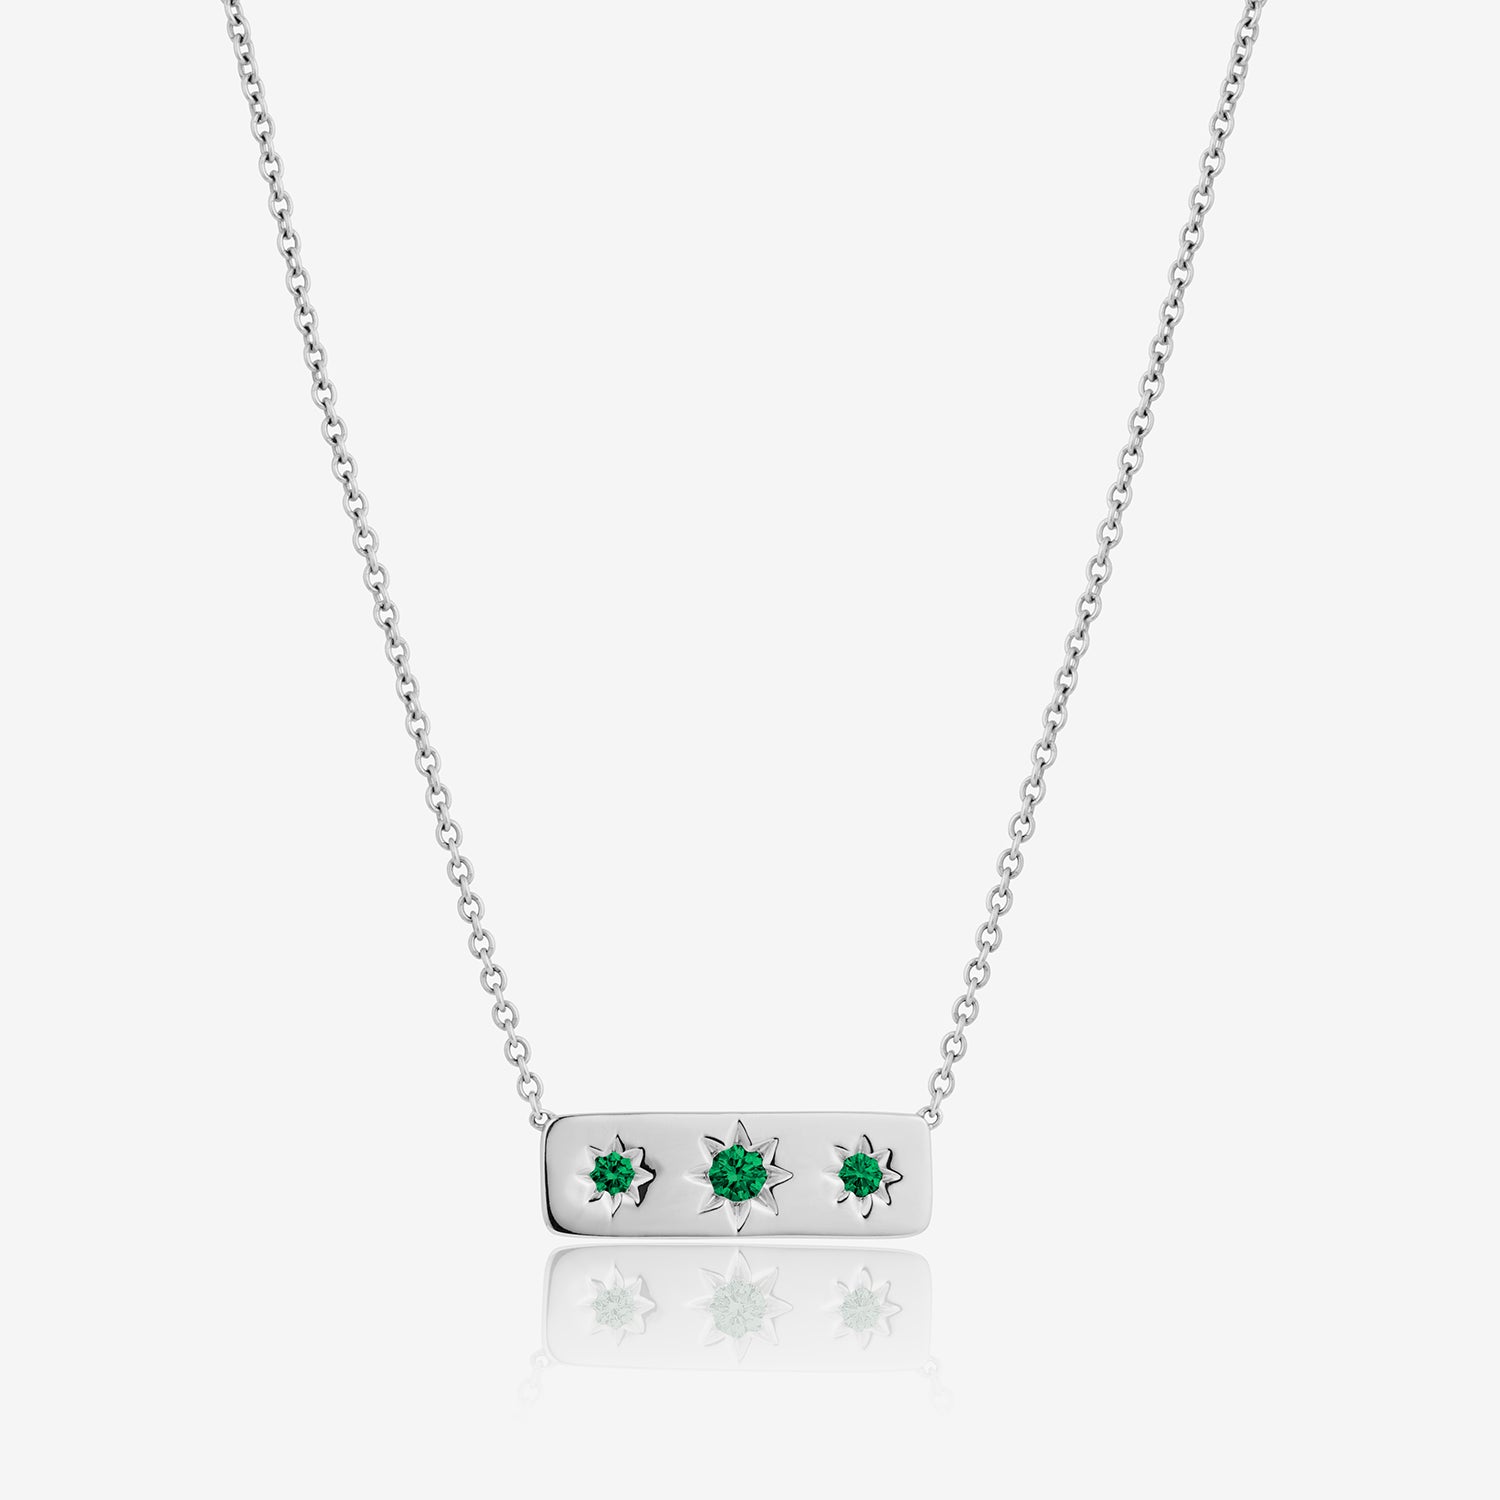 Triple Star Emerald Bar Necklace